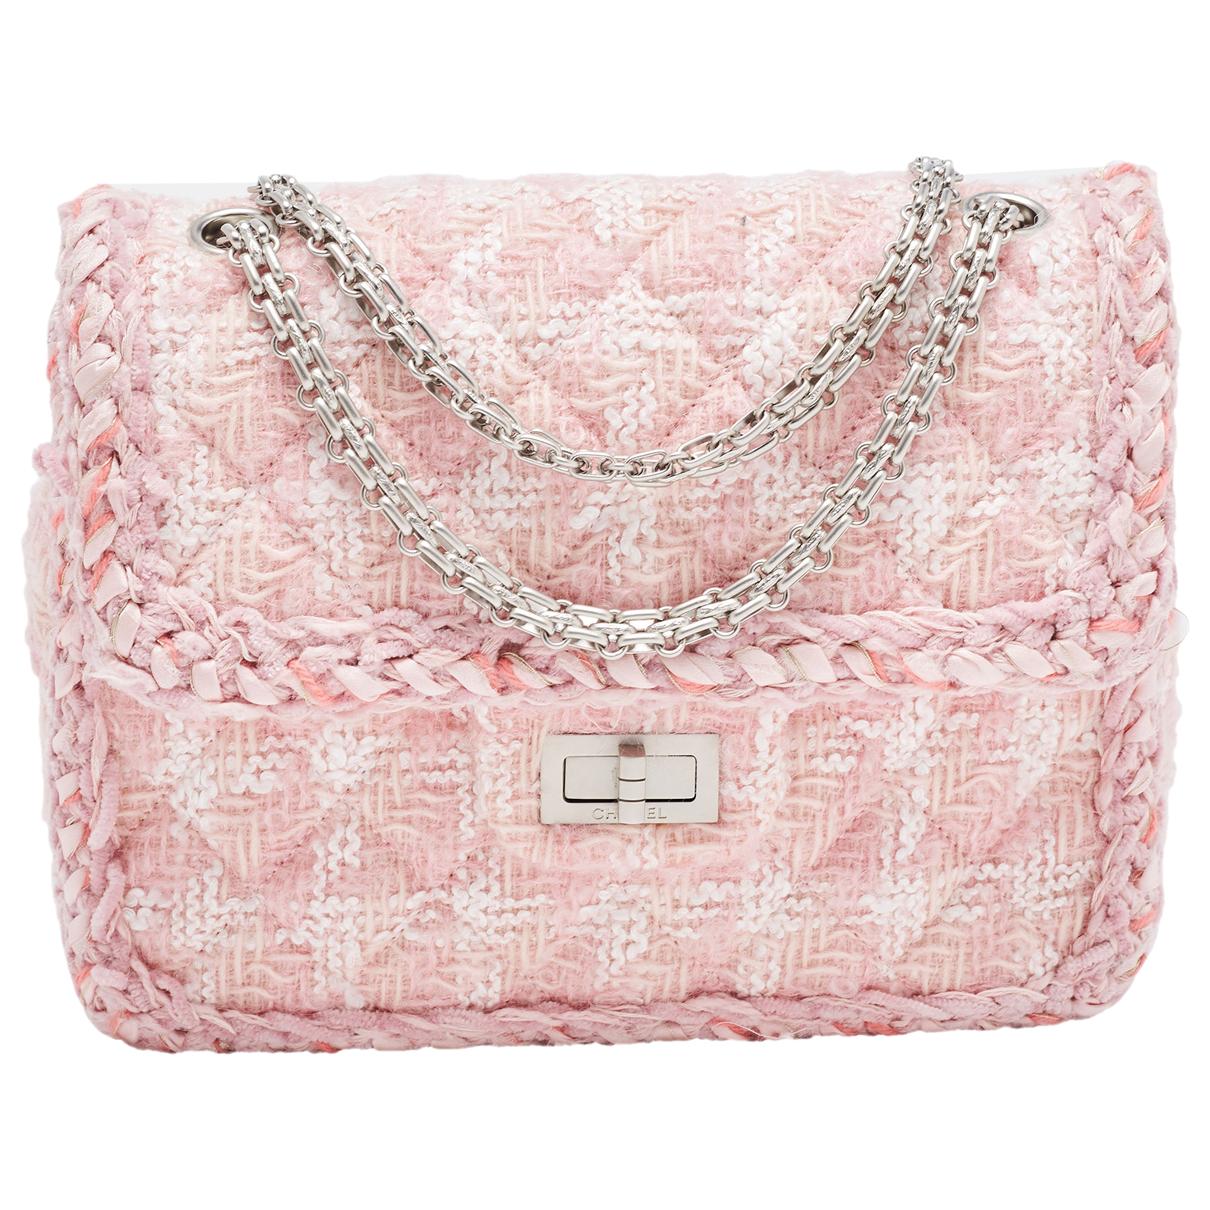 Timeless/classique tweed crossbody bag Chanel Pink in Tweed - 33339889